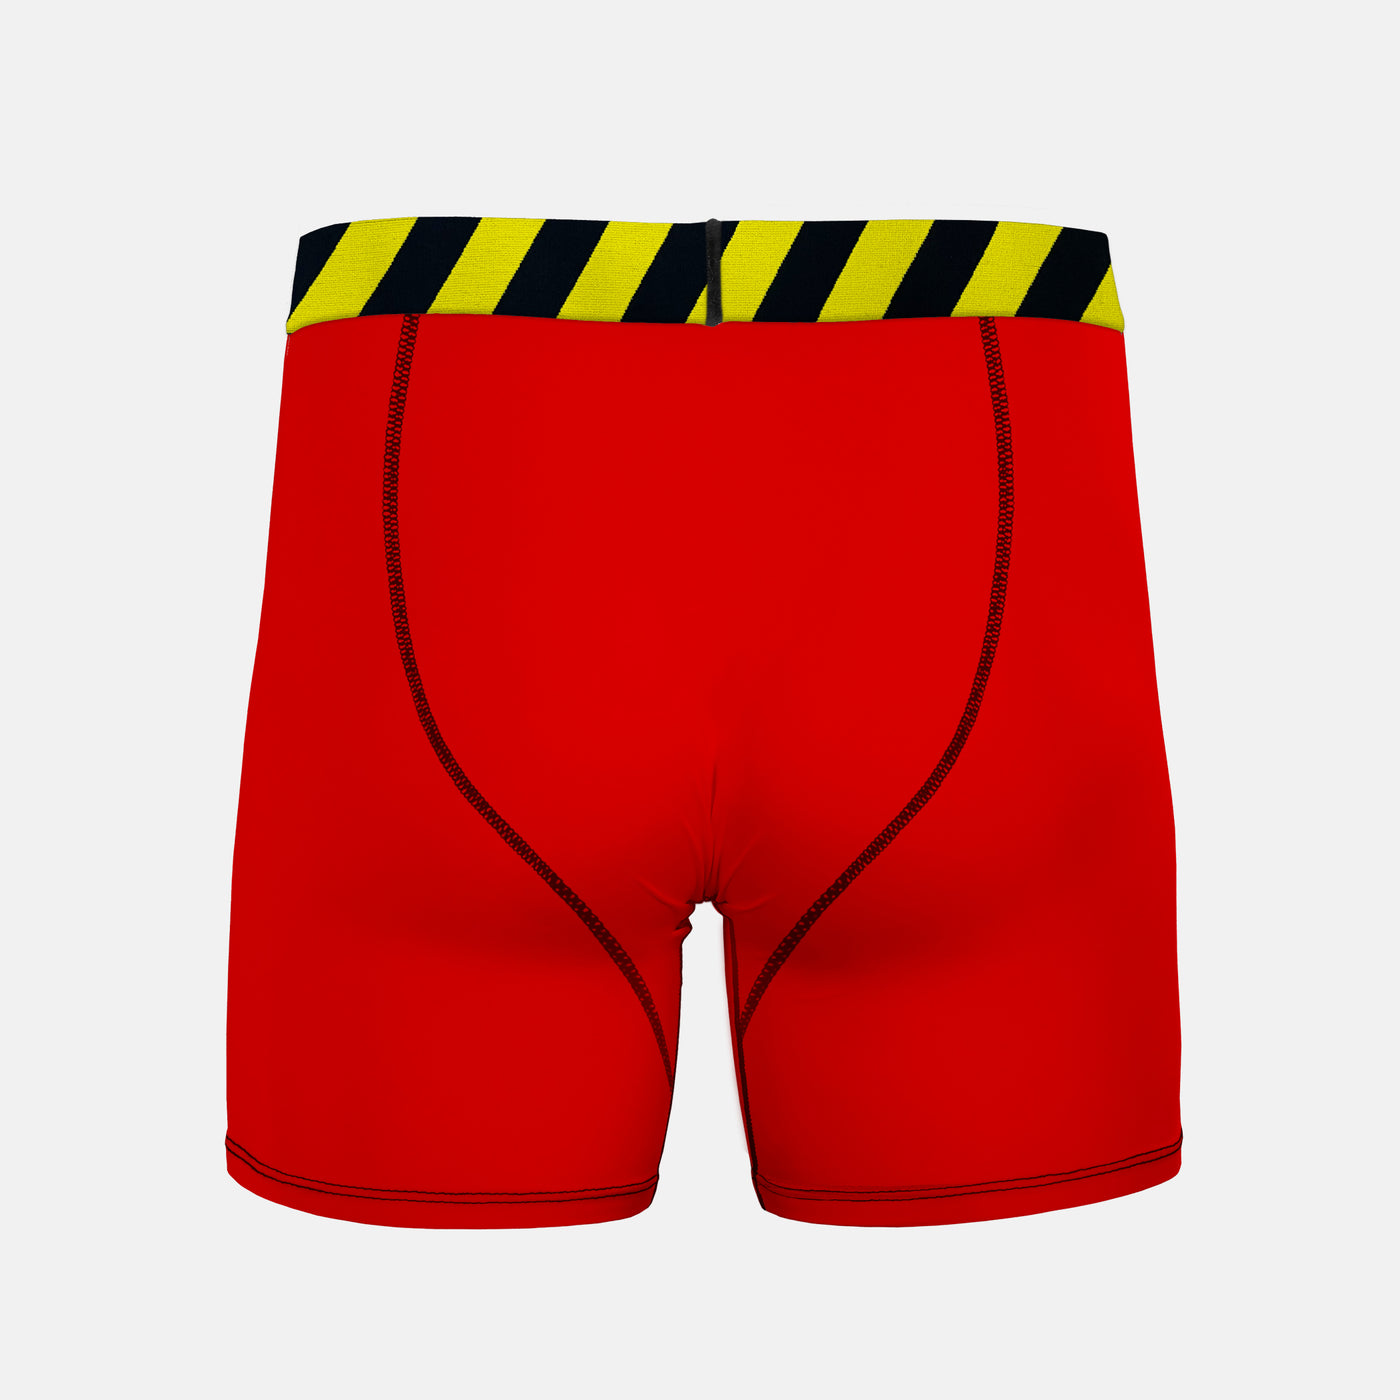 Bomb Dirty Boxers Men's Underwear